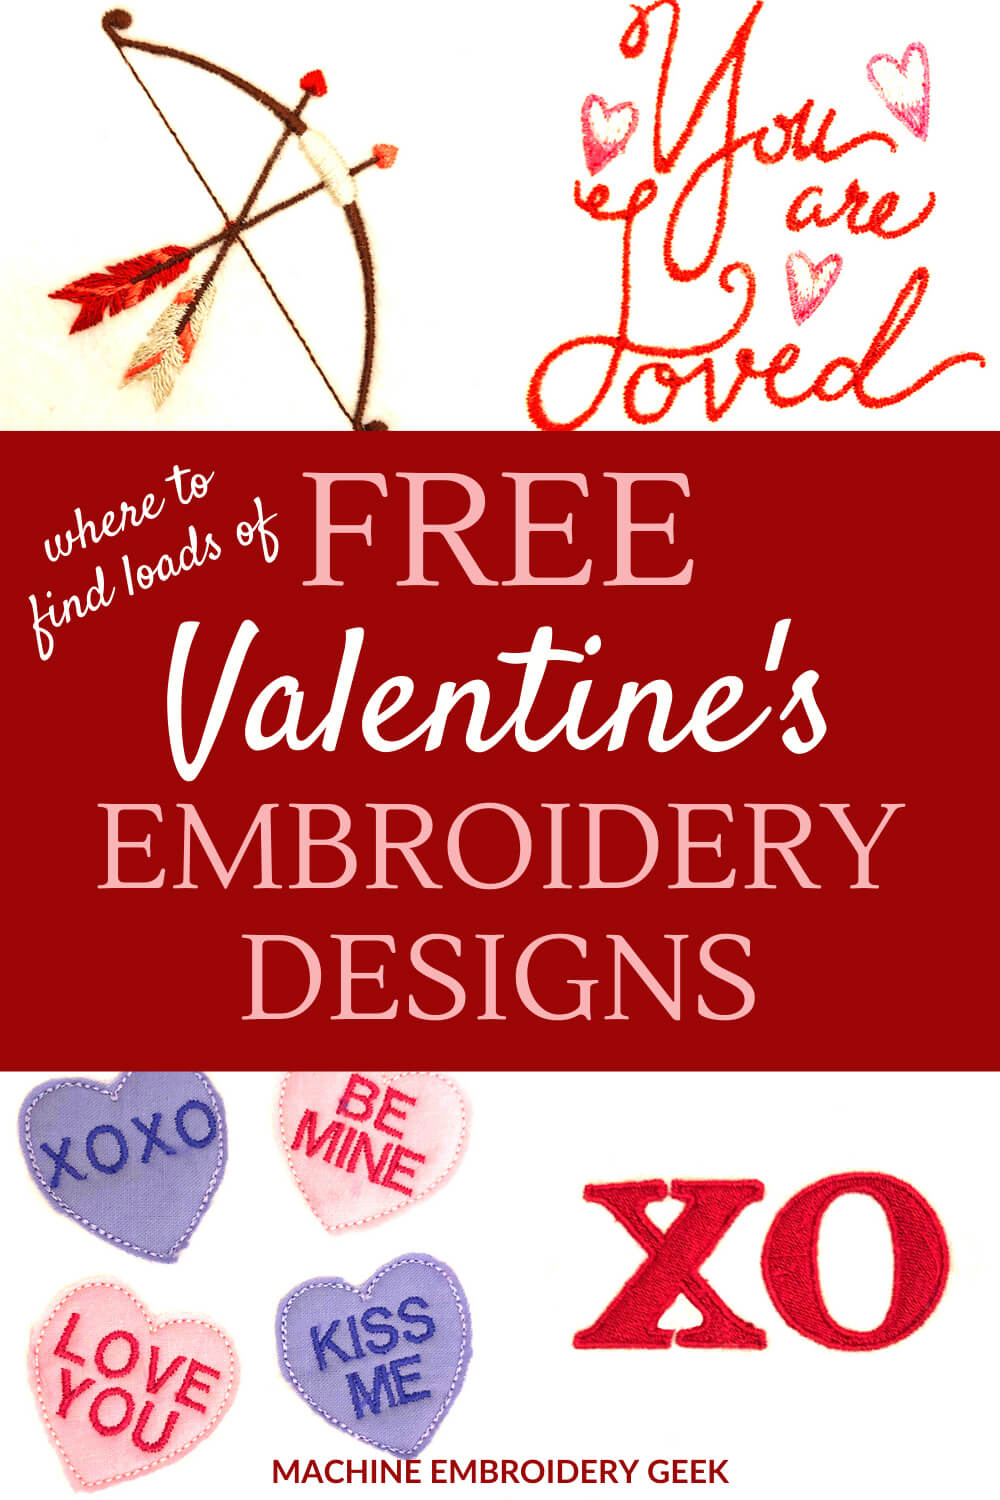 free Valentine's embroidery designs